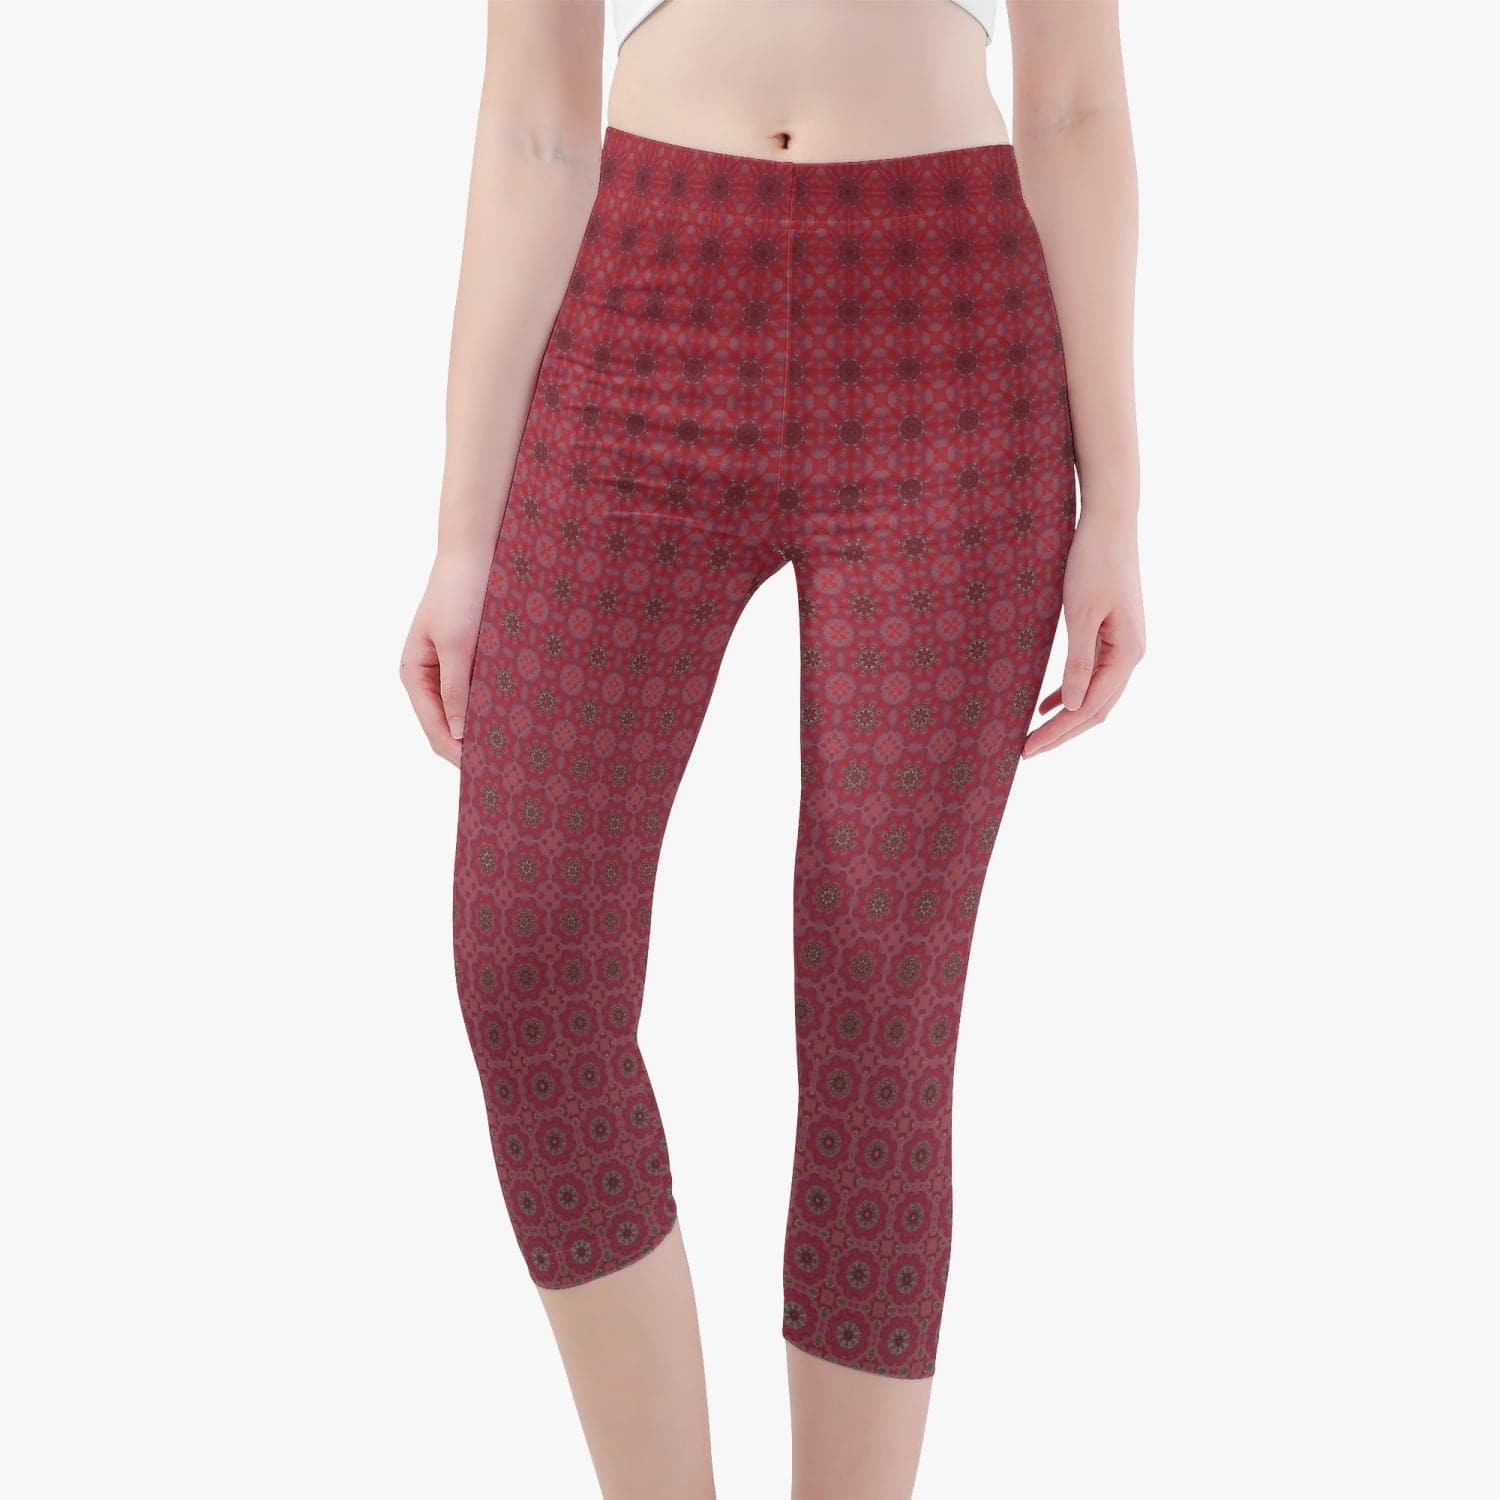 Perfect Contour Red Wine rosy patterned skinny Fit 3/4 Short Yoga, Running Pants/ Leggings, by Sensus Studio Design